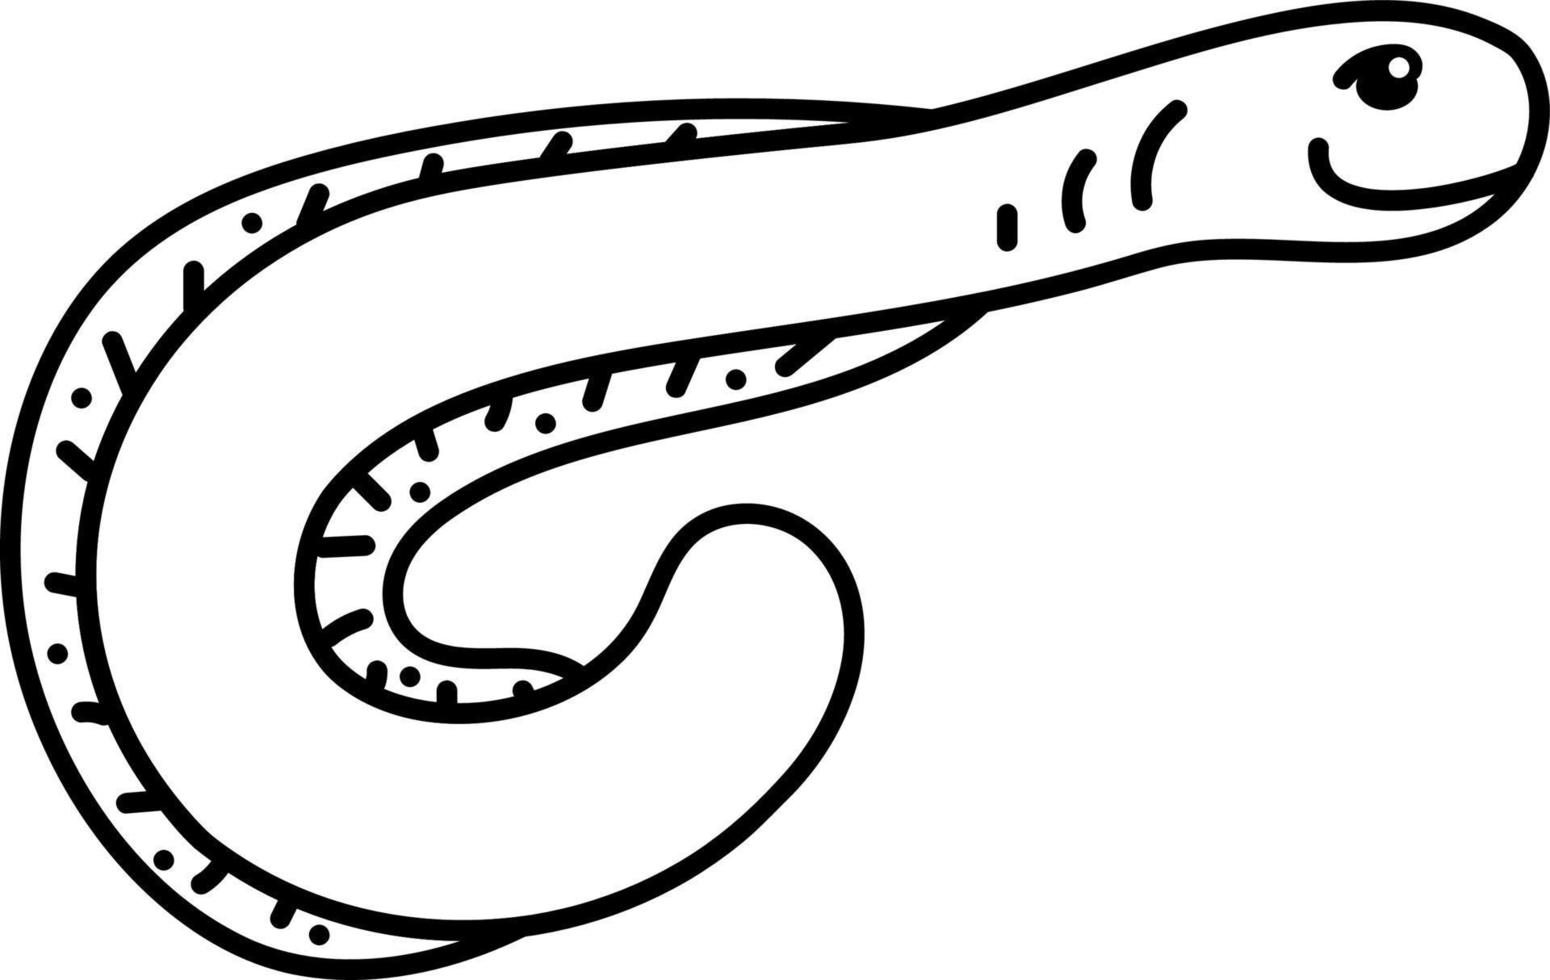 Sea eel doodle. Cute single sea eel with smile. Cartoon white and black vector illustration.